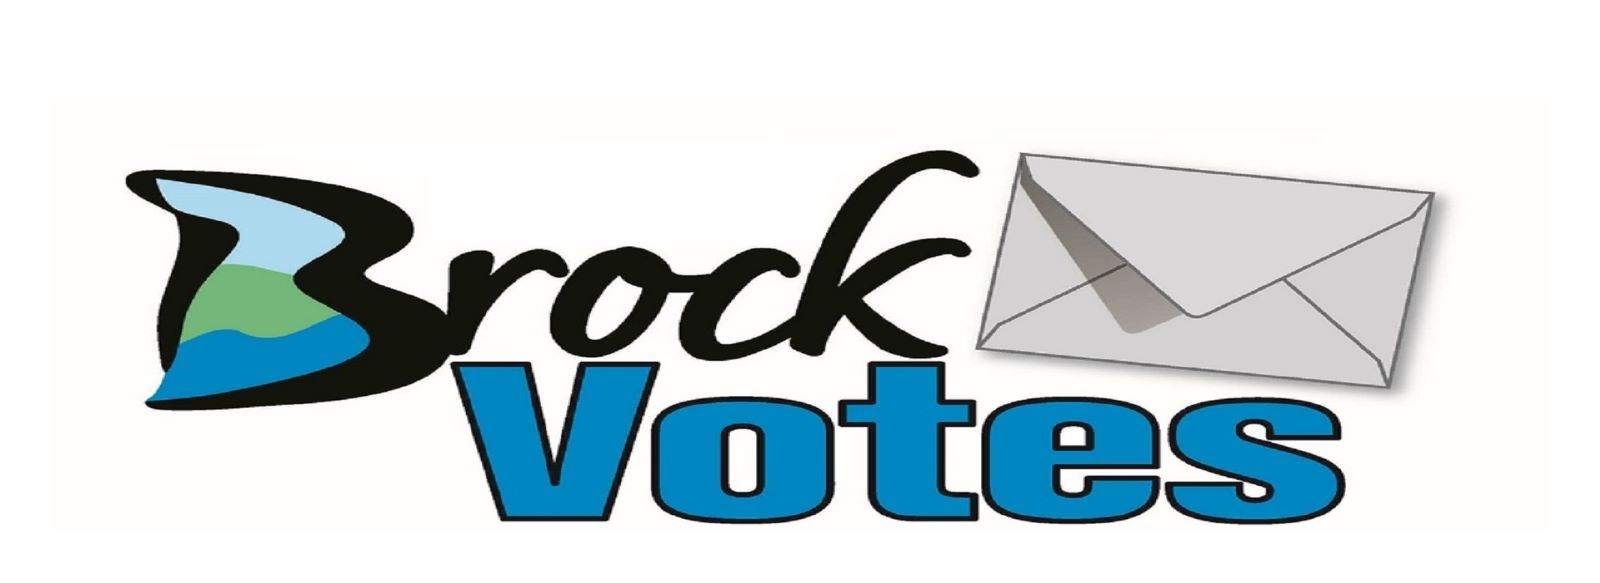 Township of Brock election logo